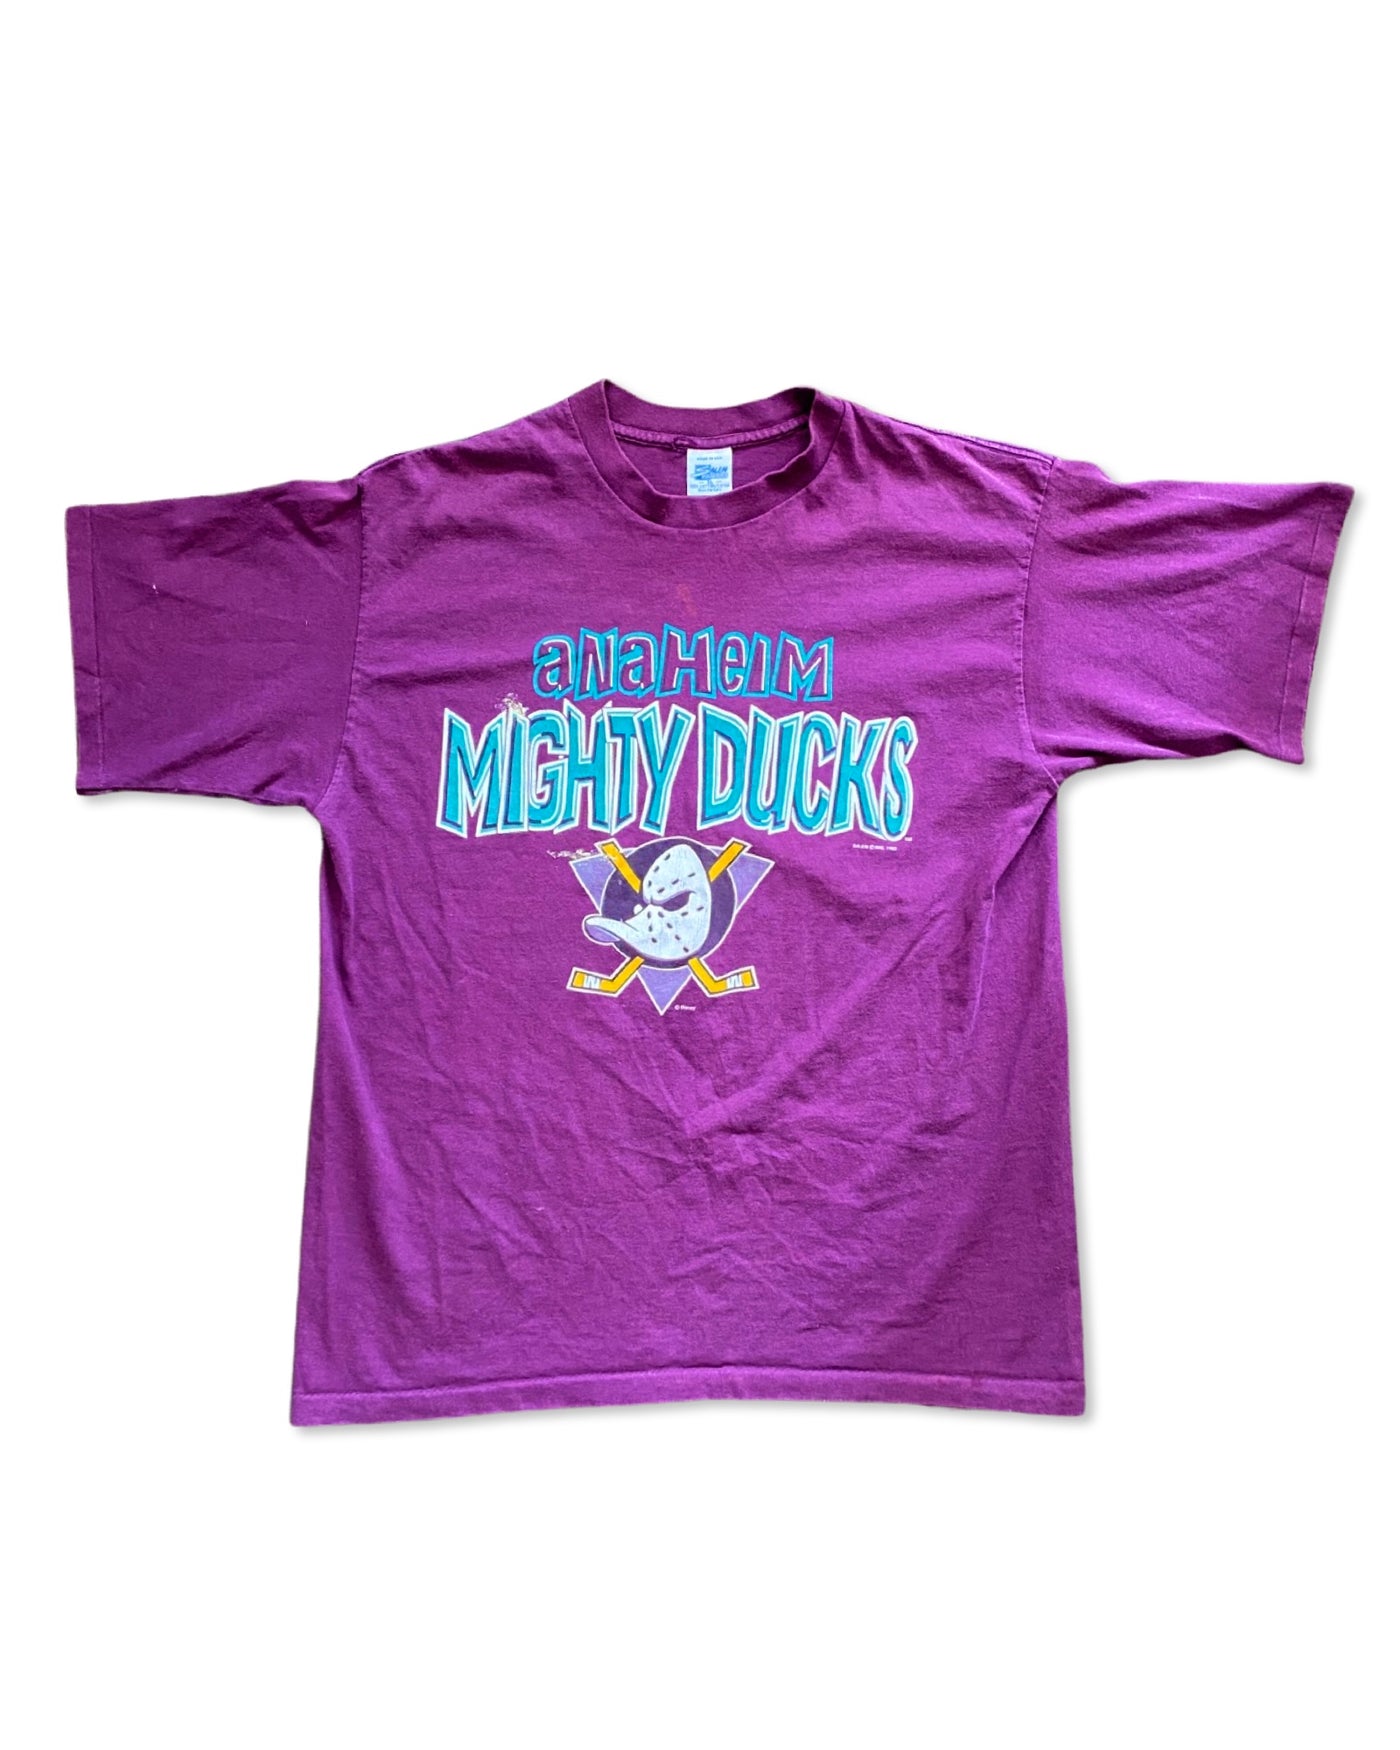 Vintage 1993 Mighty Ducks T-Shirt